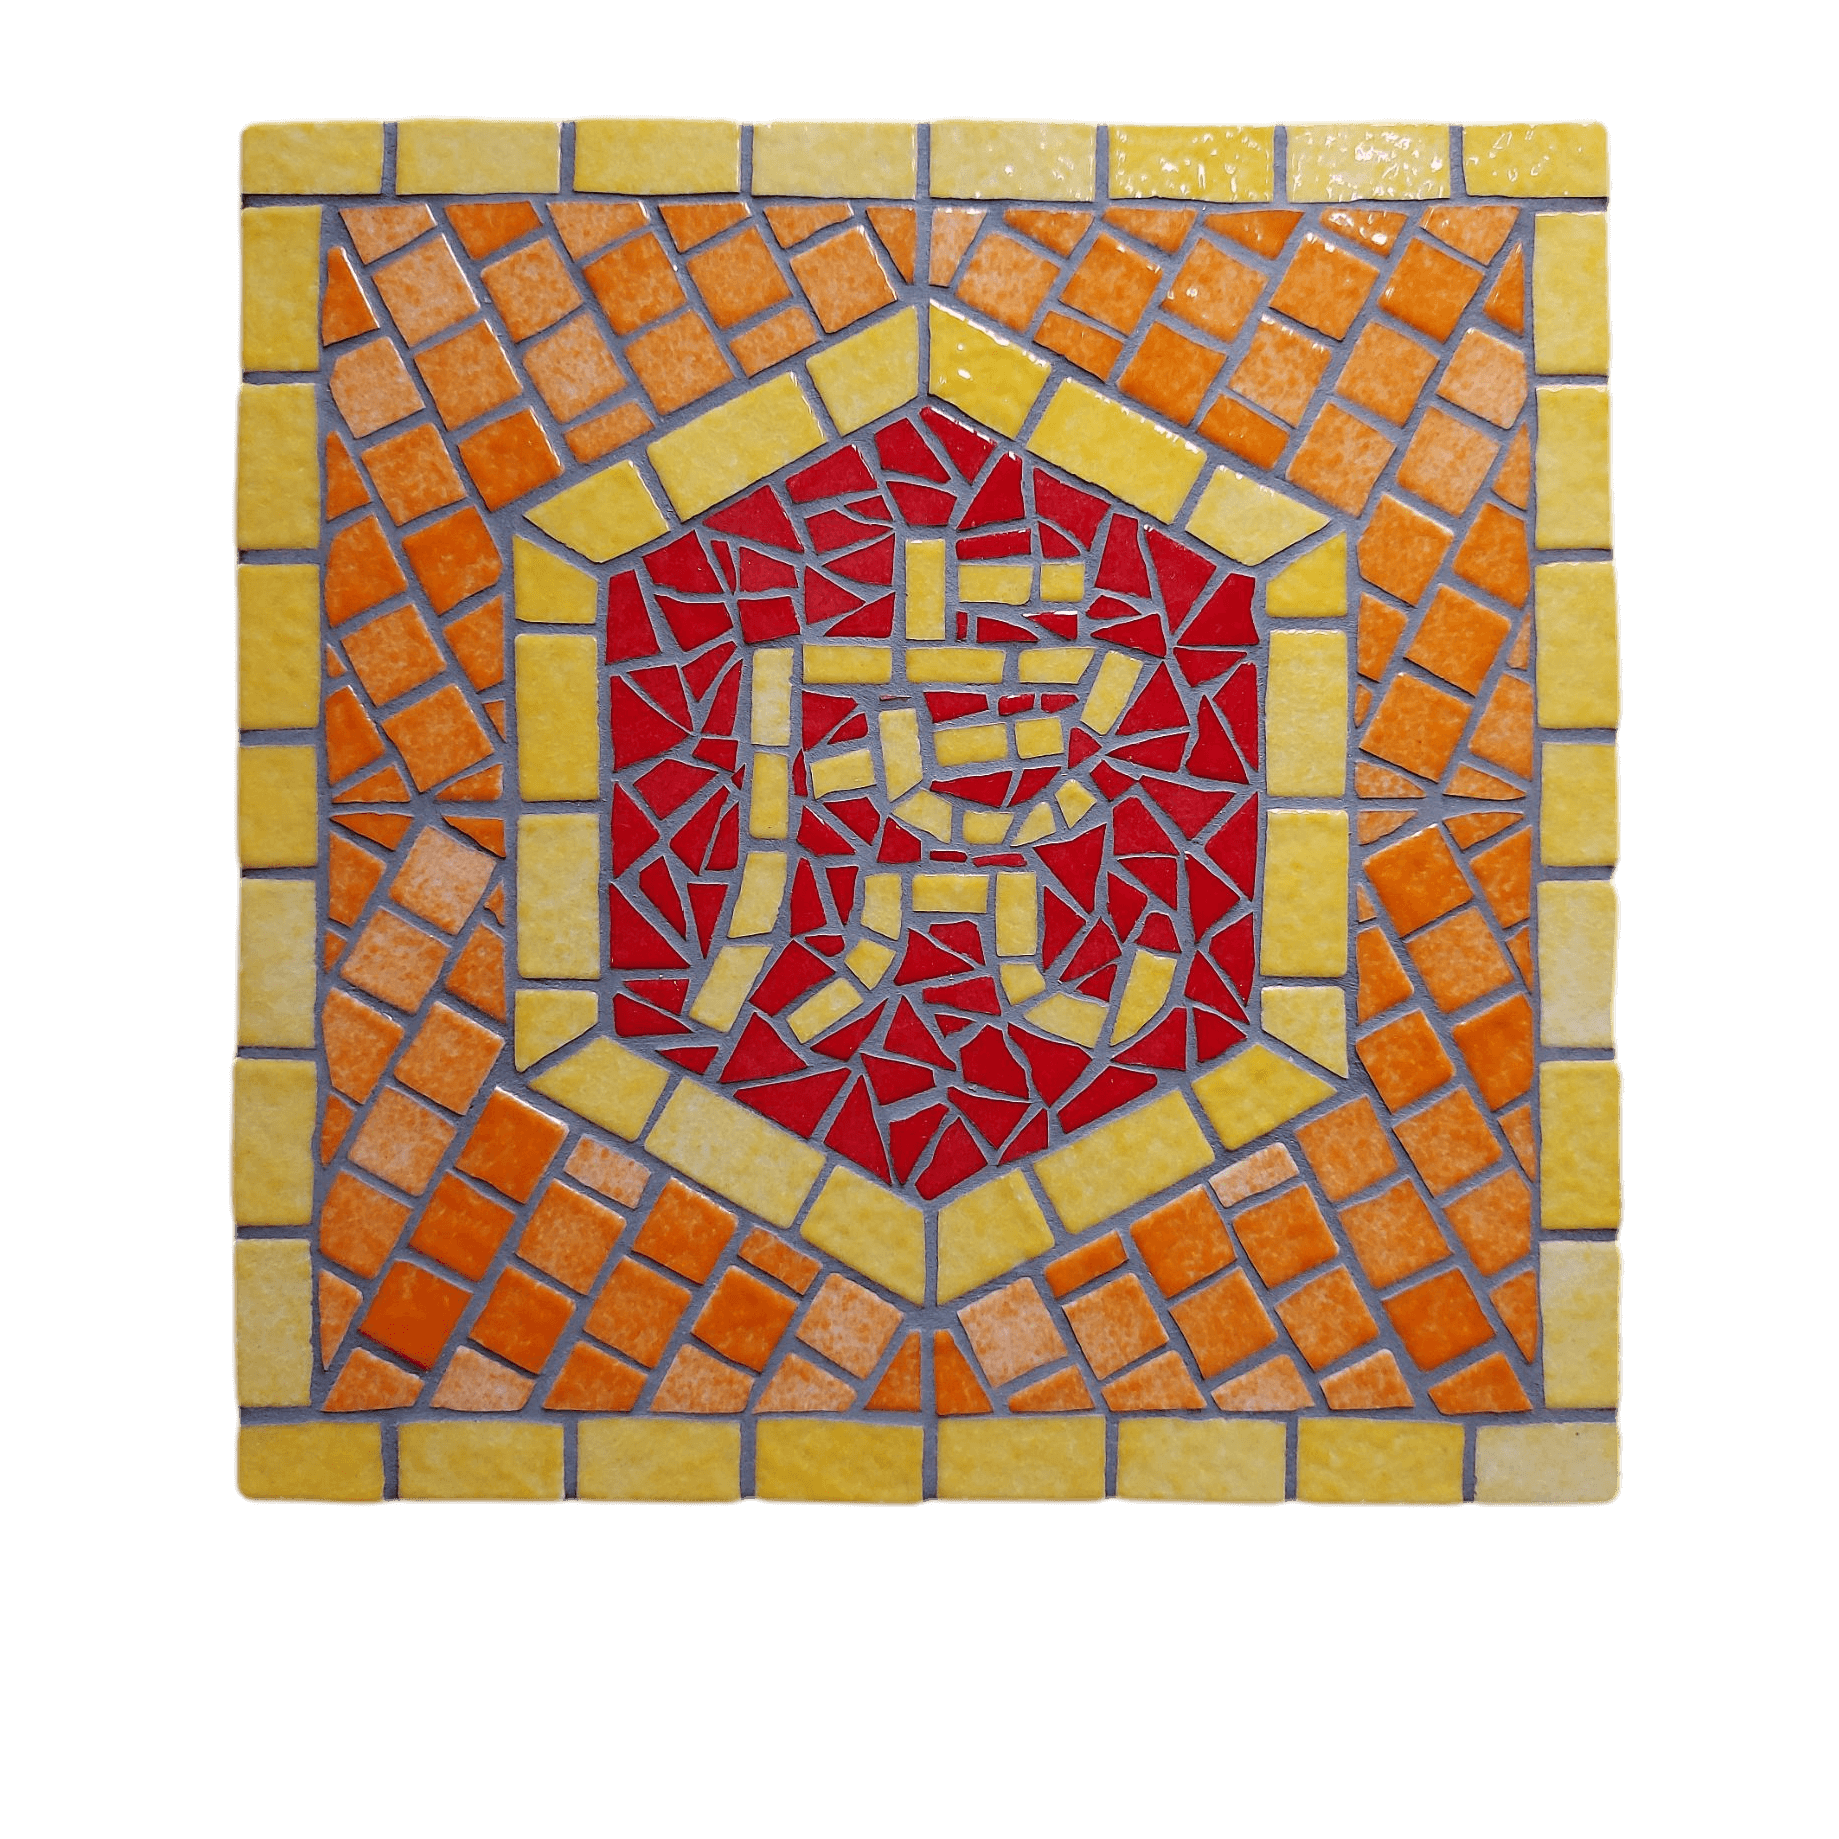 Artisanal Chinese zodiac mosaic, Tiger sign, yellow line